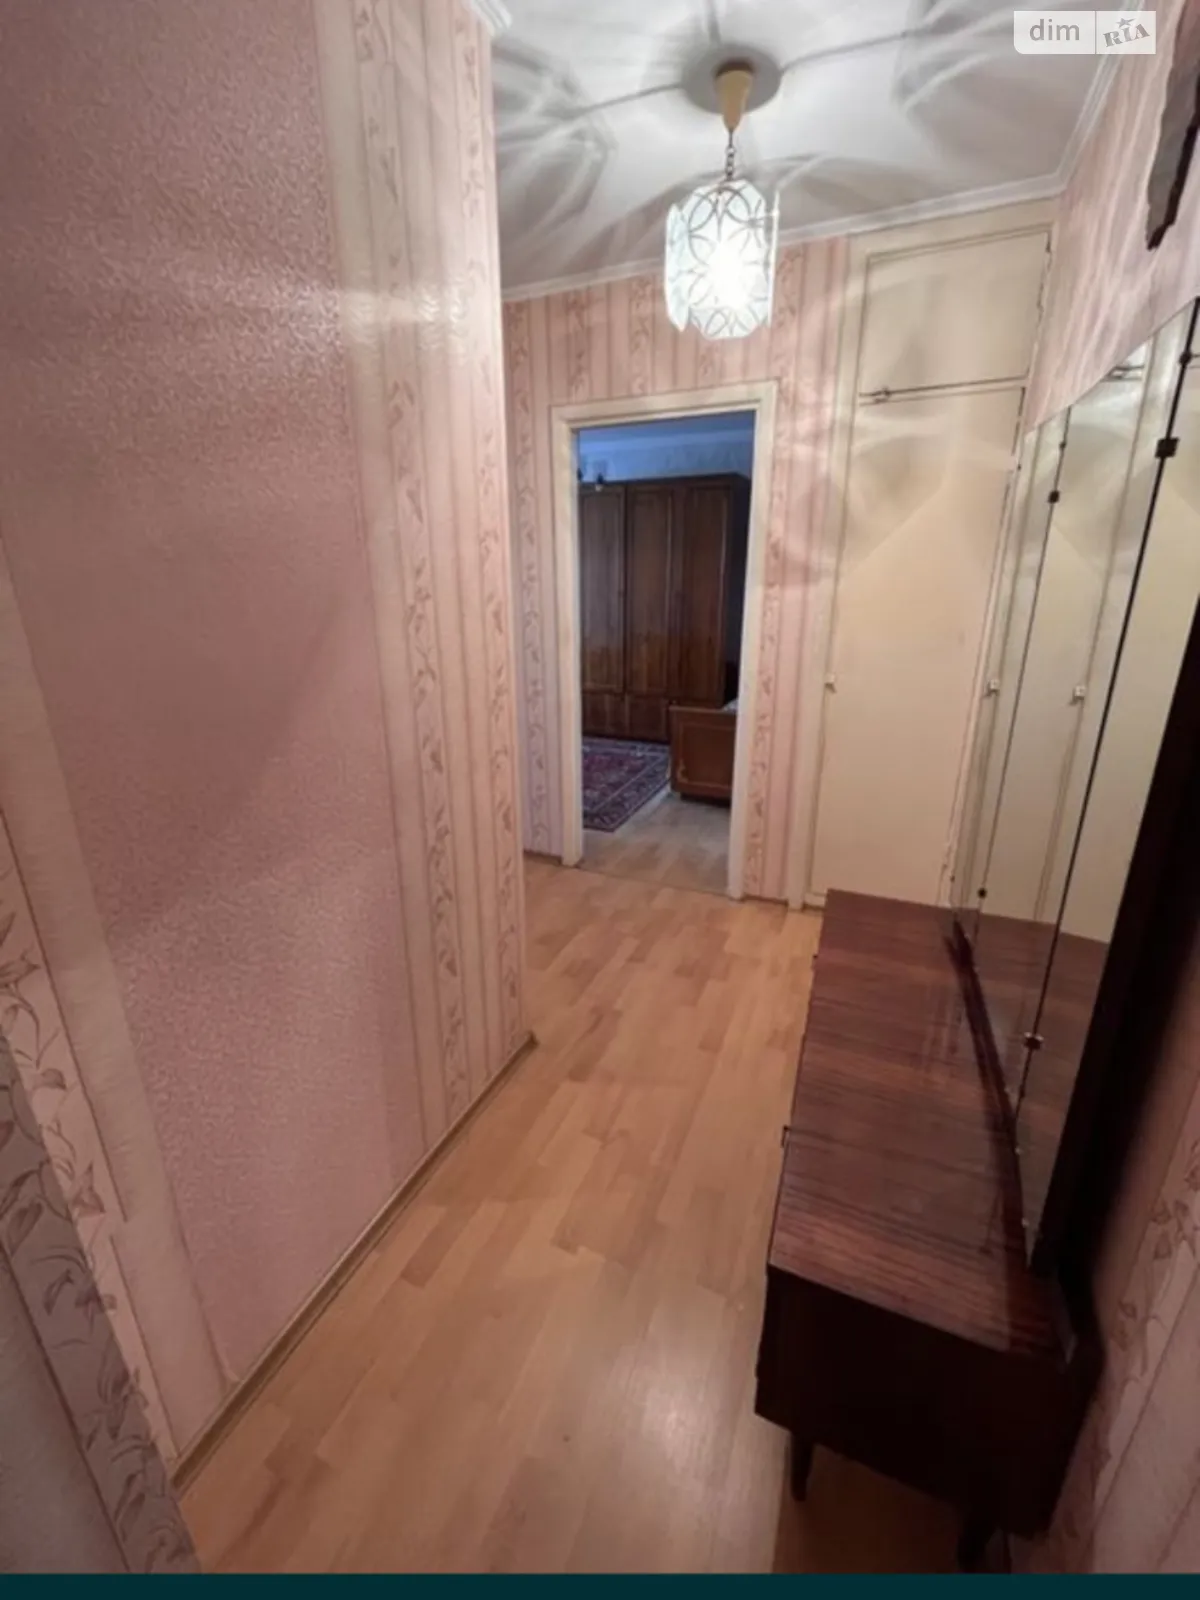 1-кімнатна квартира 32 кв. м у Луцьку, цена: 32600 $